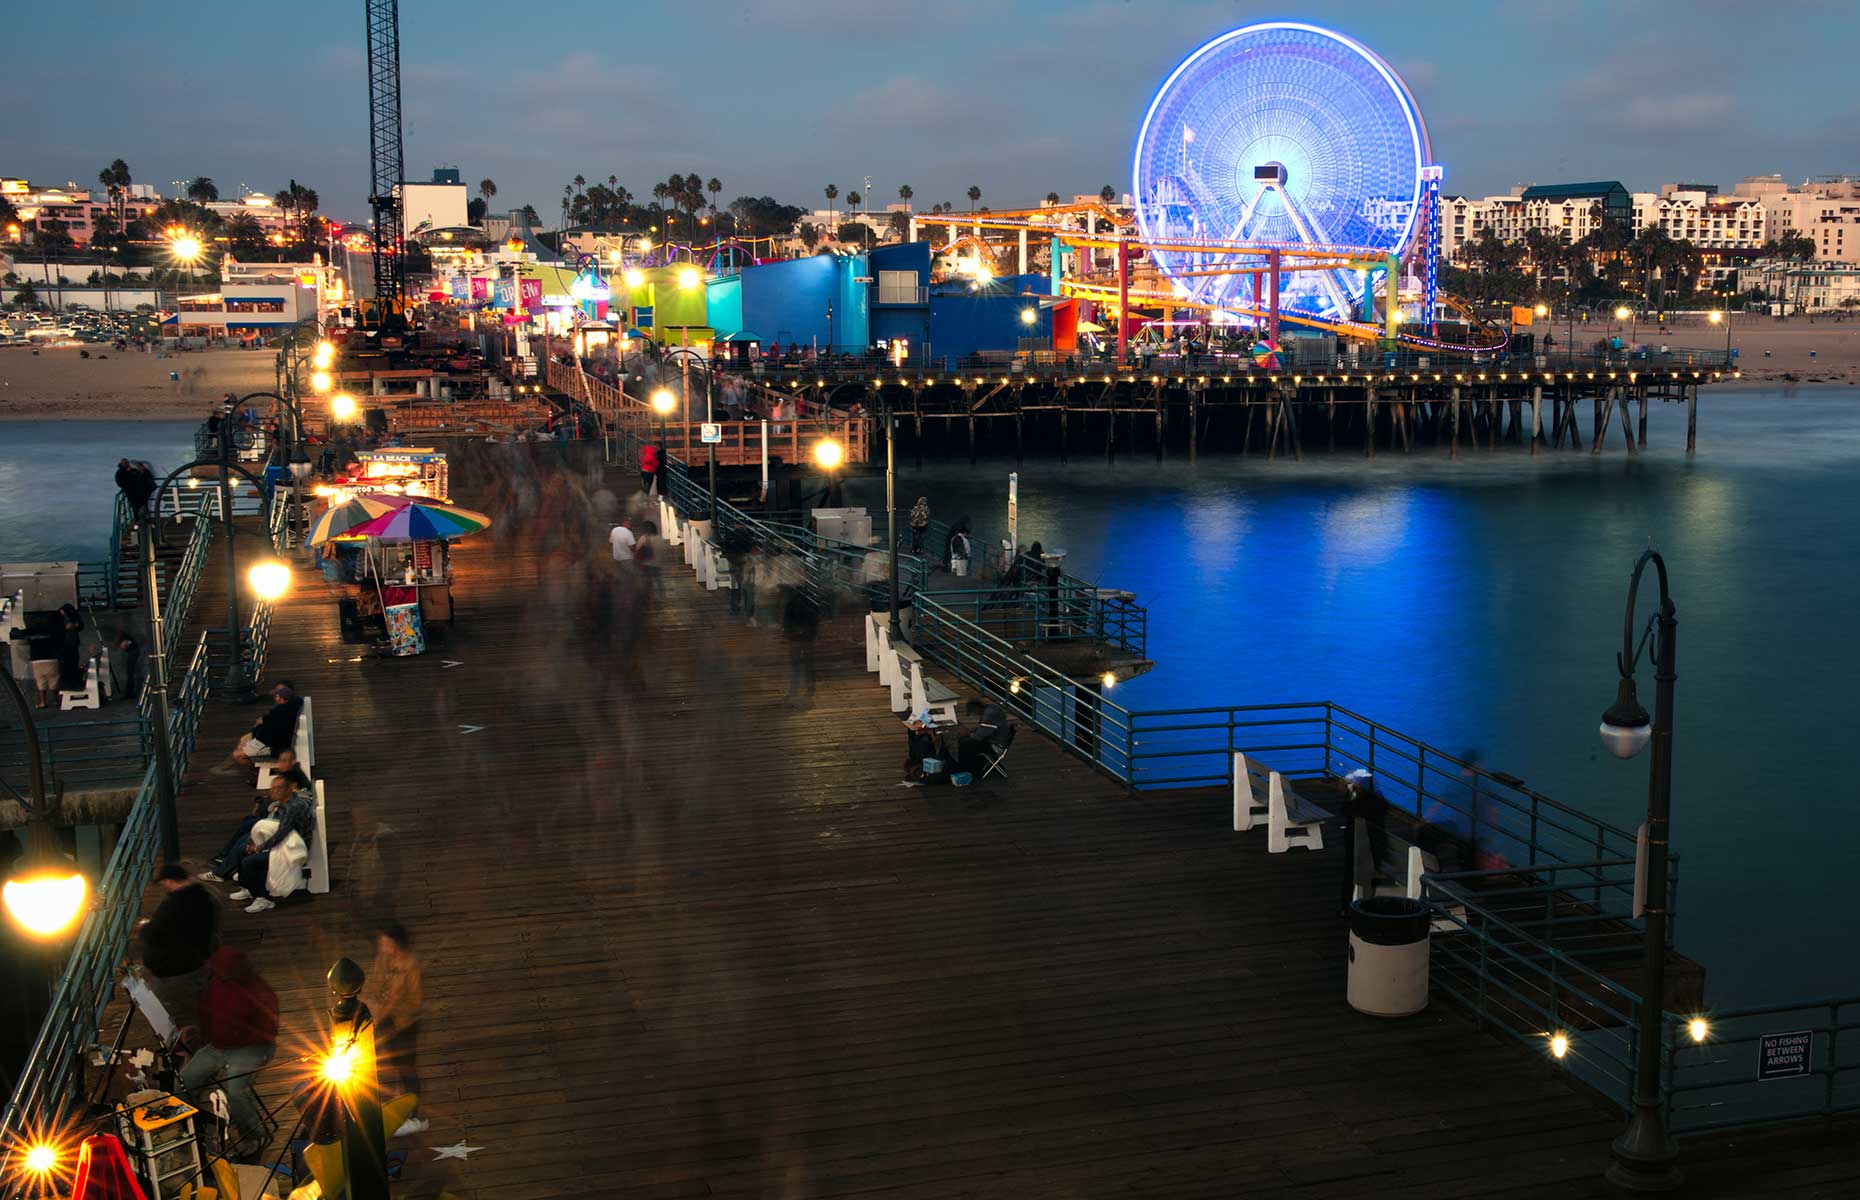 Santa Monica Pier (Image: Celso Diniz/Shutterstock)